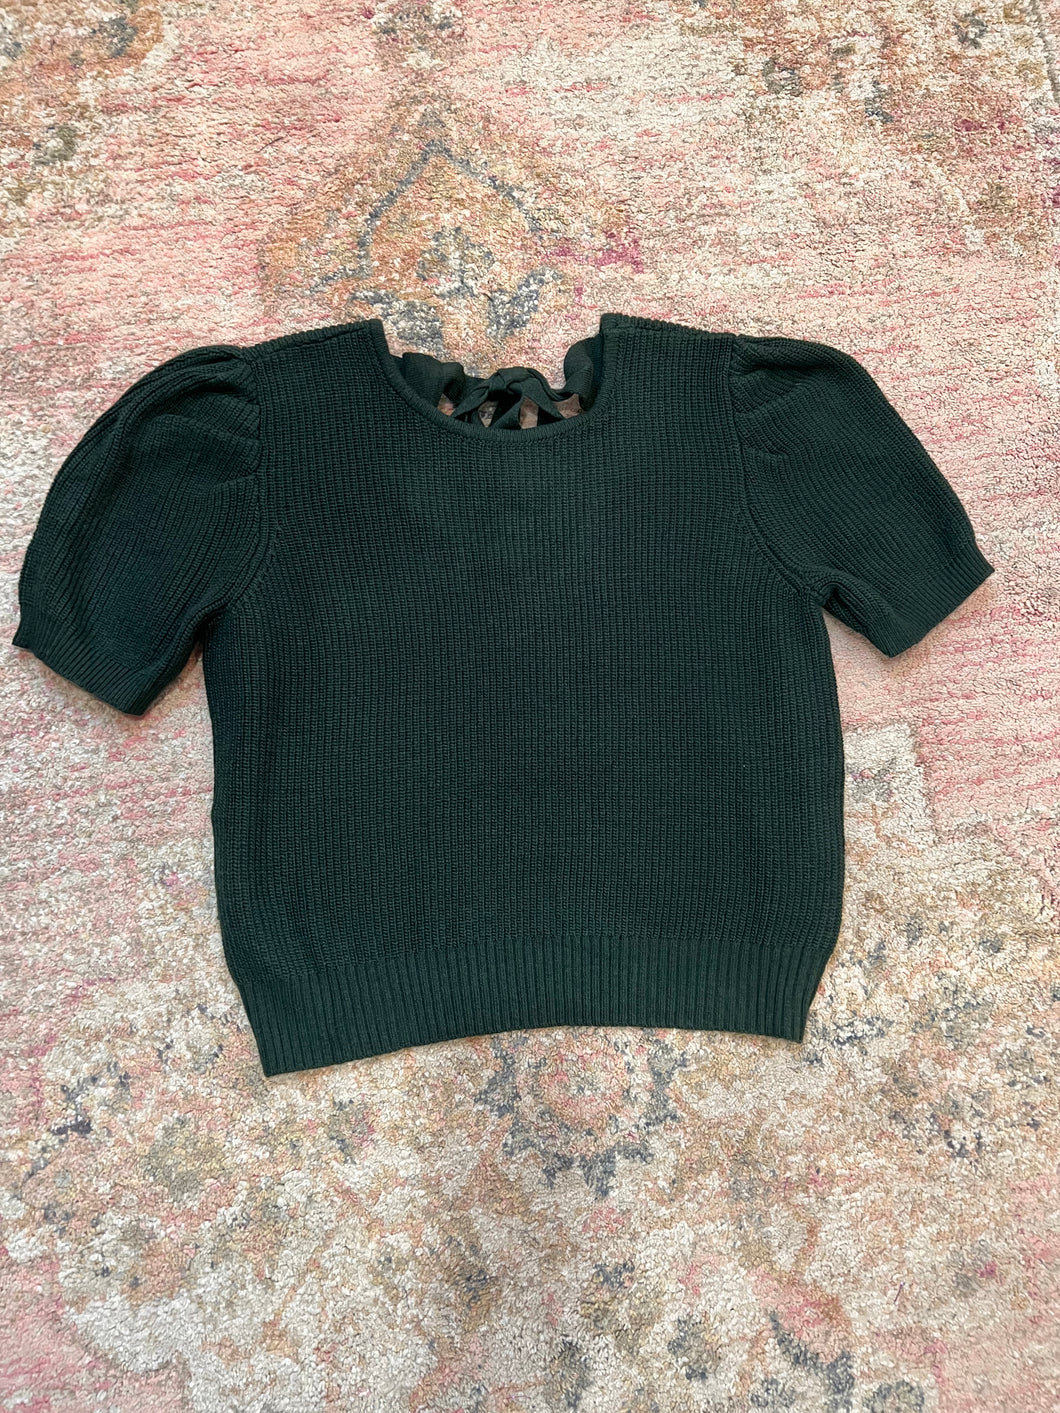 Forest Green Kai Tie Sweater